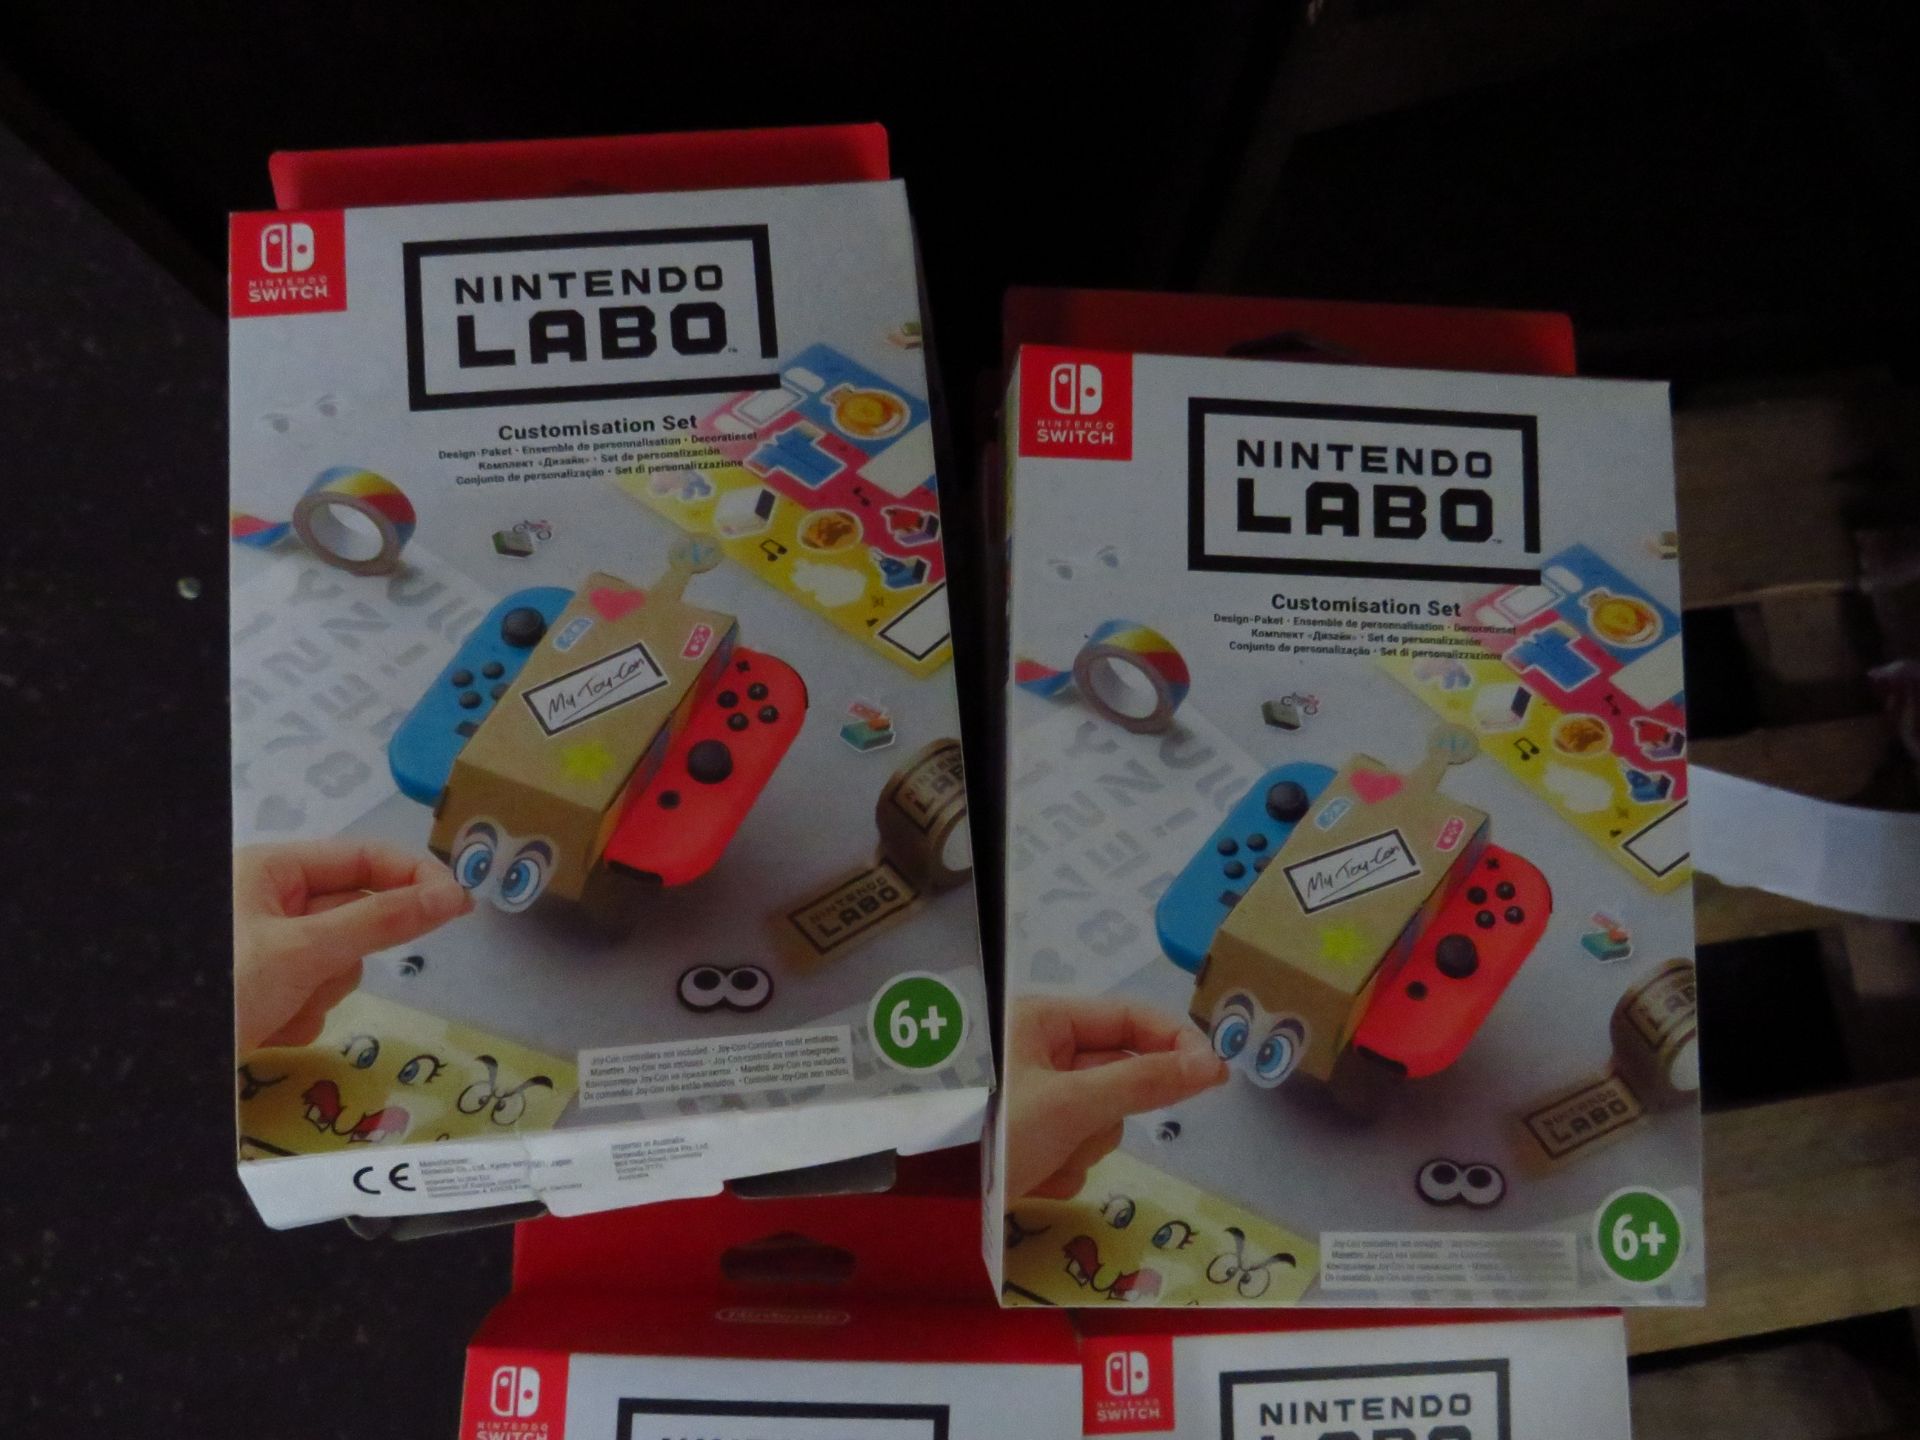 5x Nintendo Labo customisation sets, all new